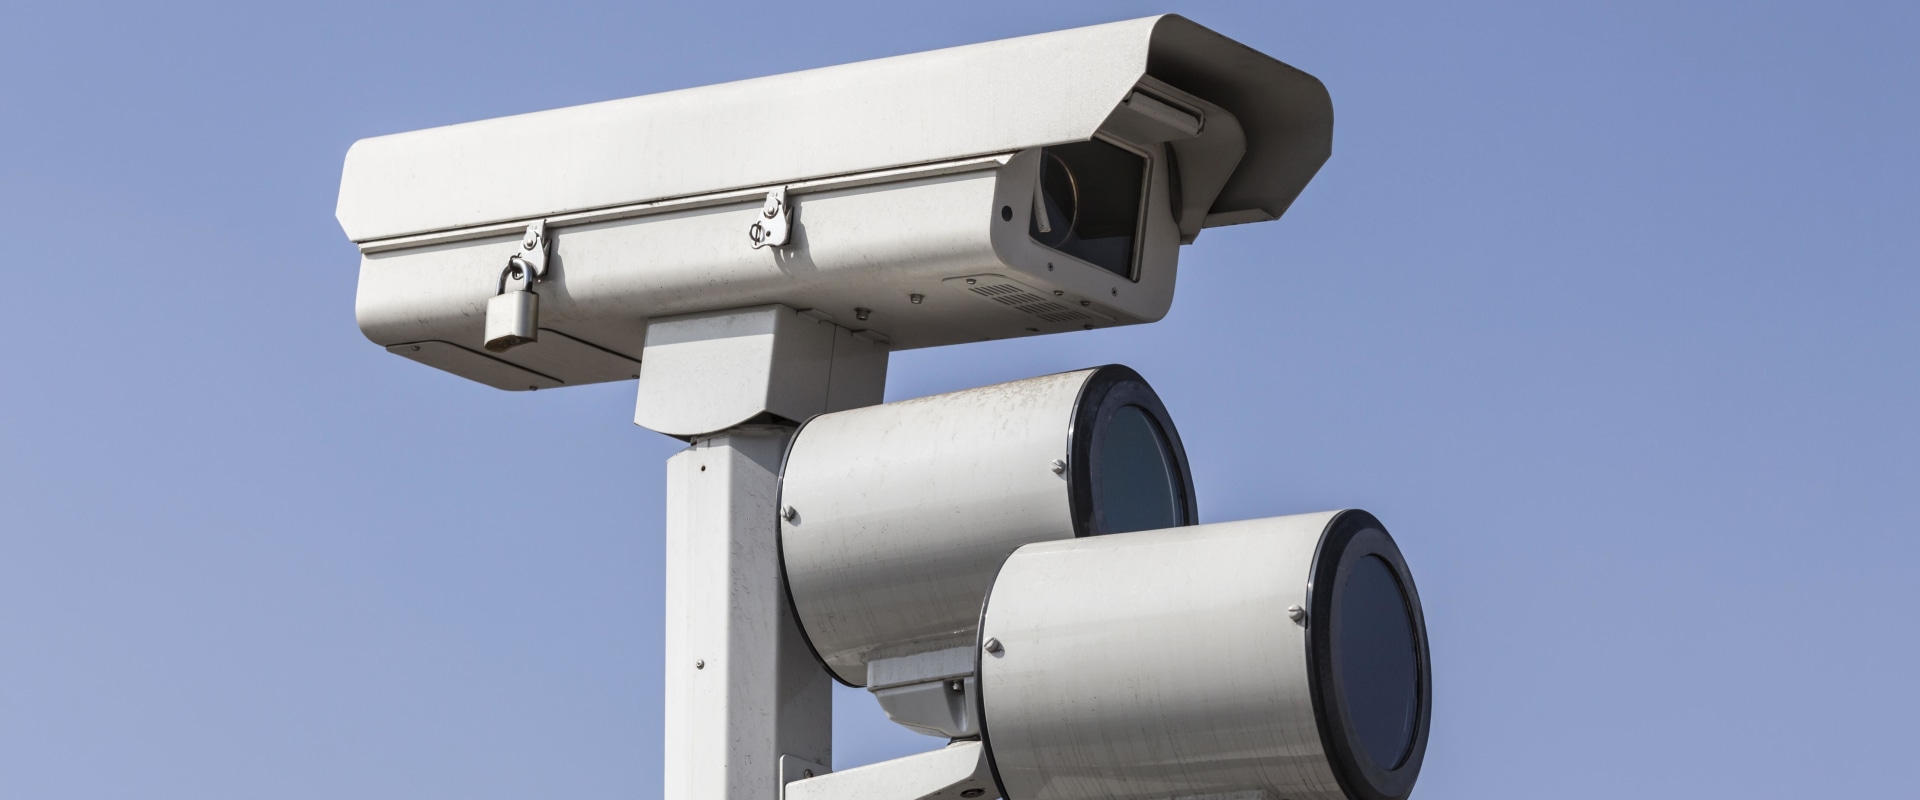 Are traffic camera tickets legal in ohio?